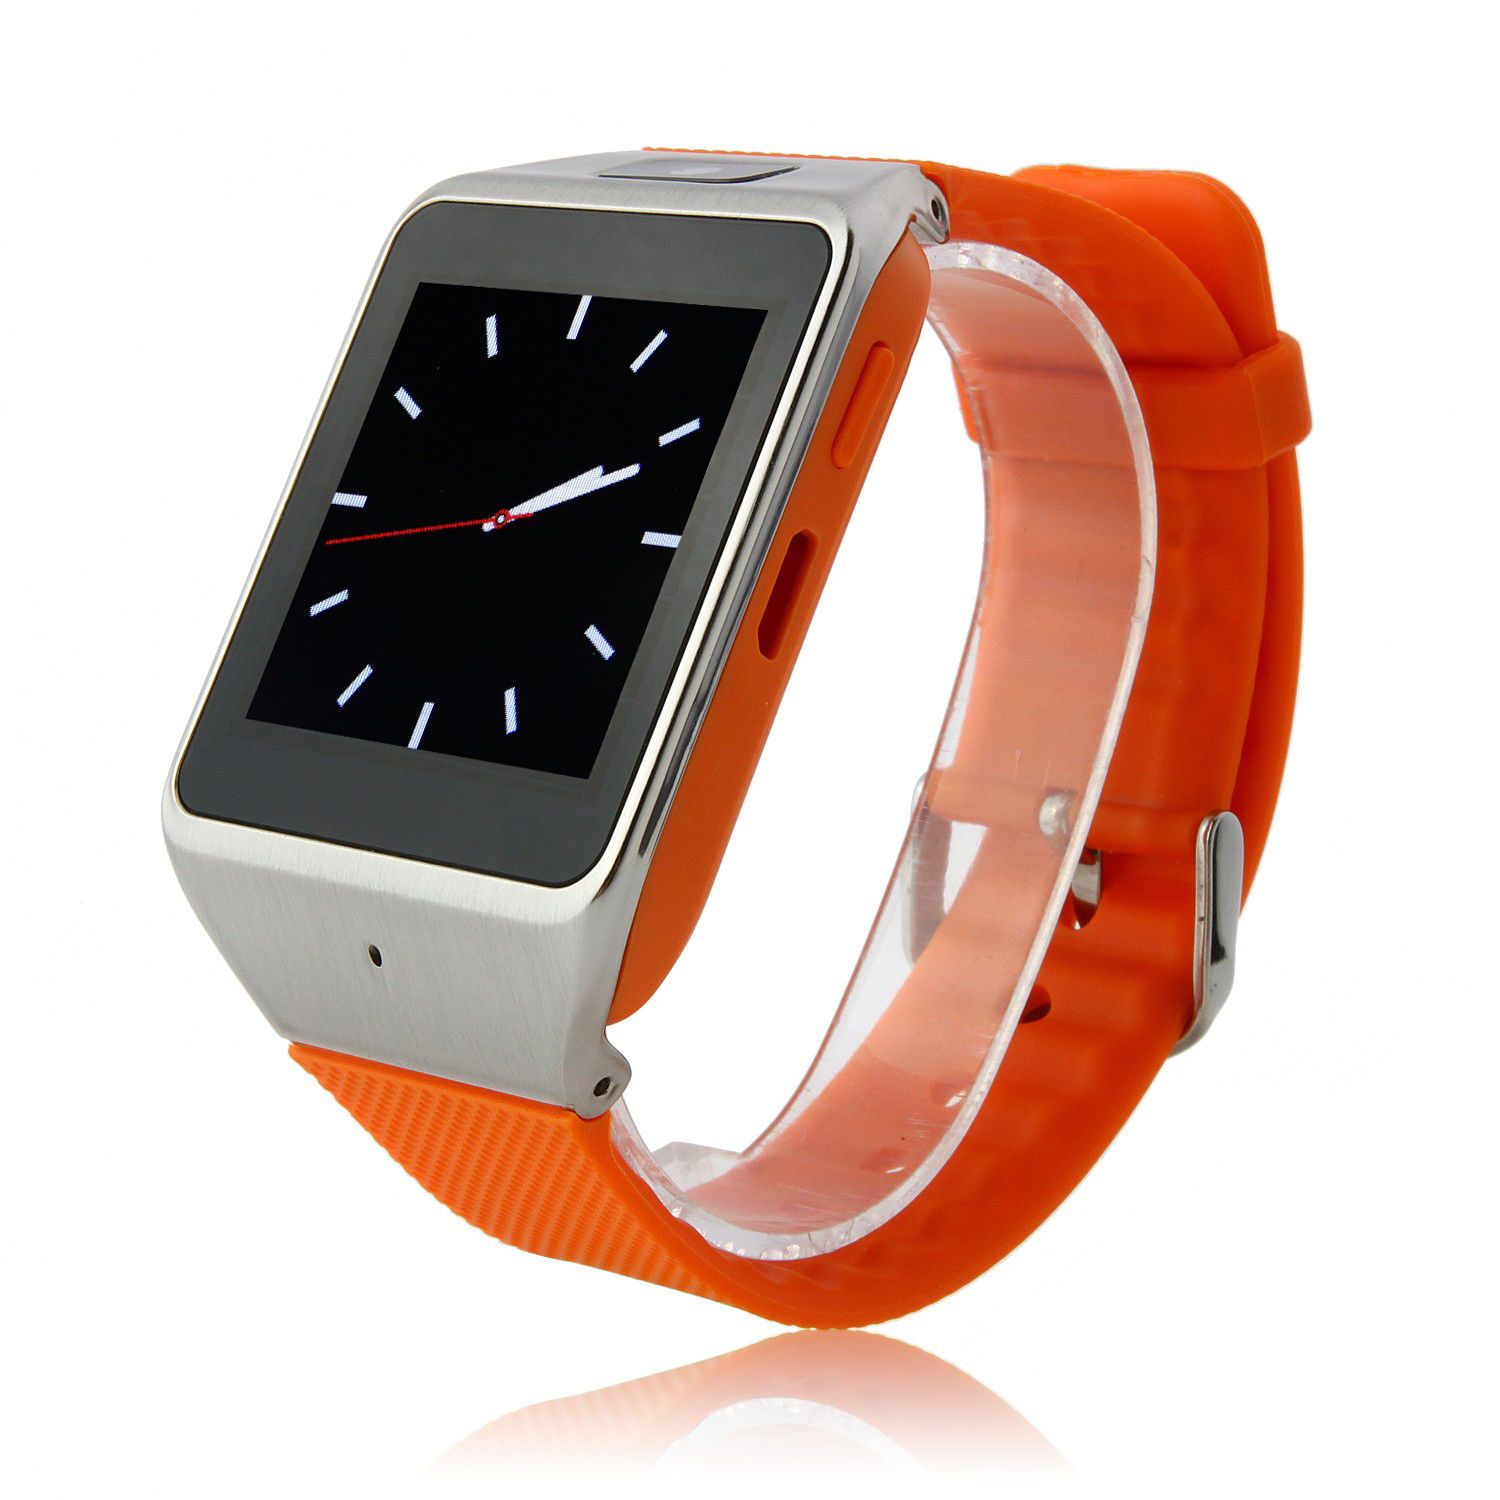 Watch support. Часы смарт Оранге. Смарт часы оранжевые. Смарт часы женские оранжевые. Смарт часы в оранжевой коробке.